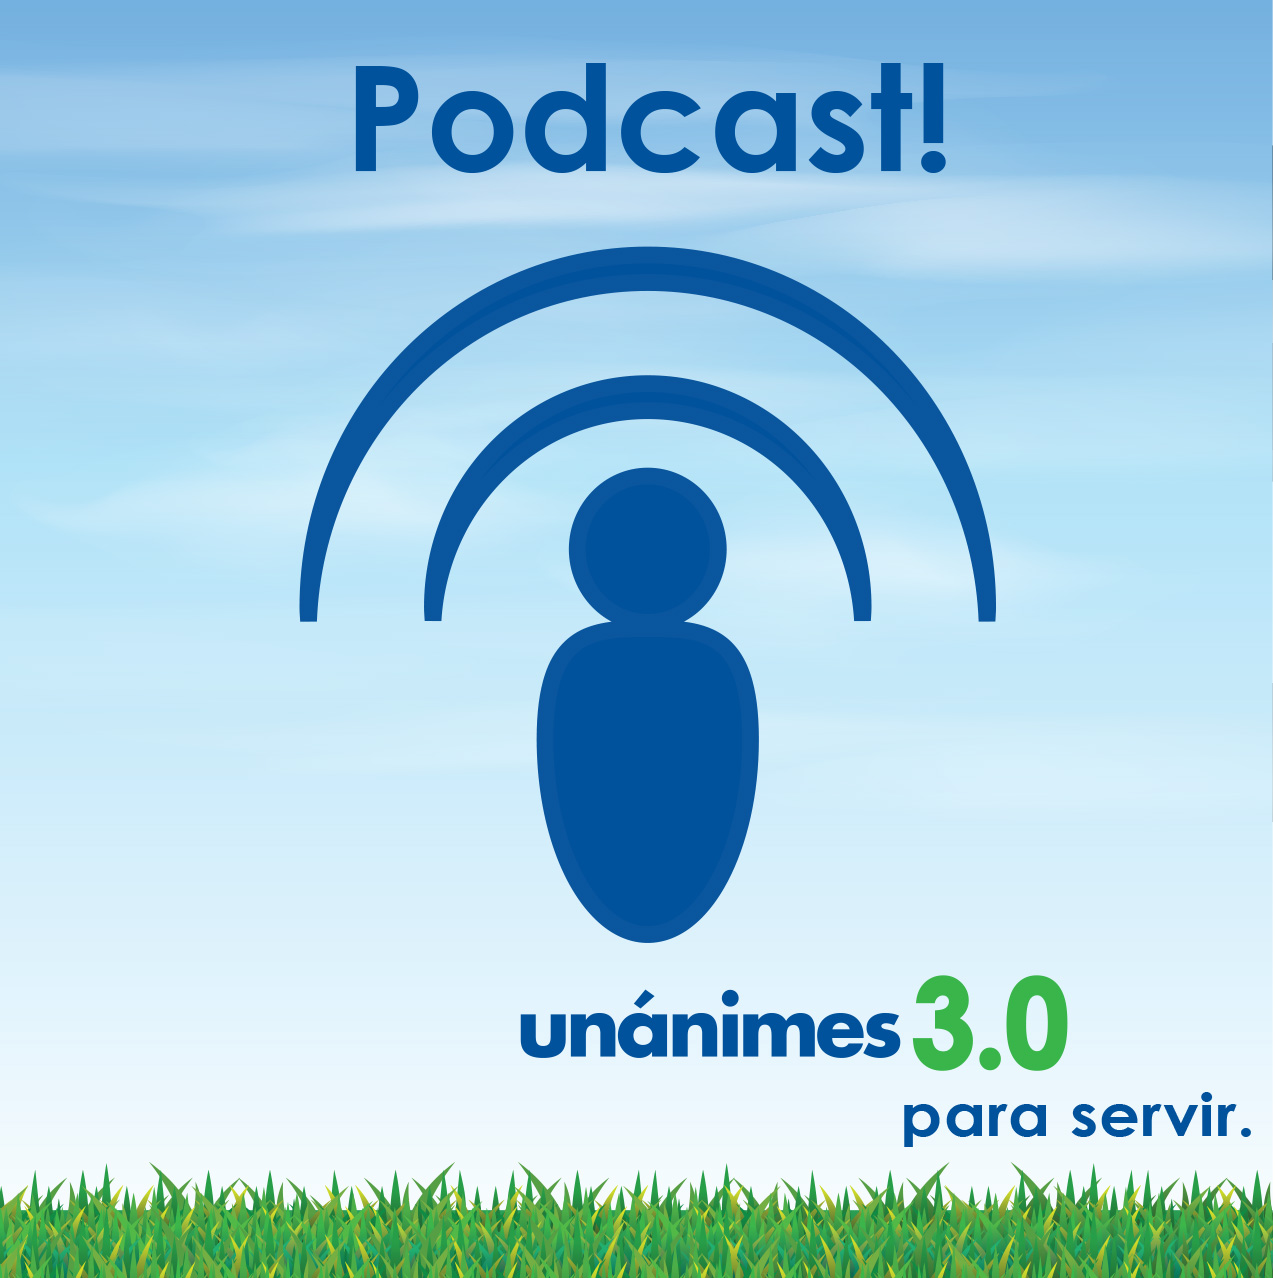 Unanimes.org Podcast